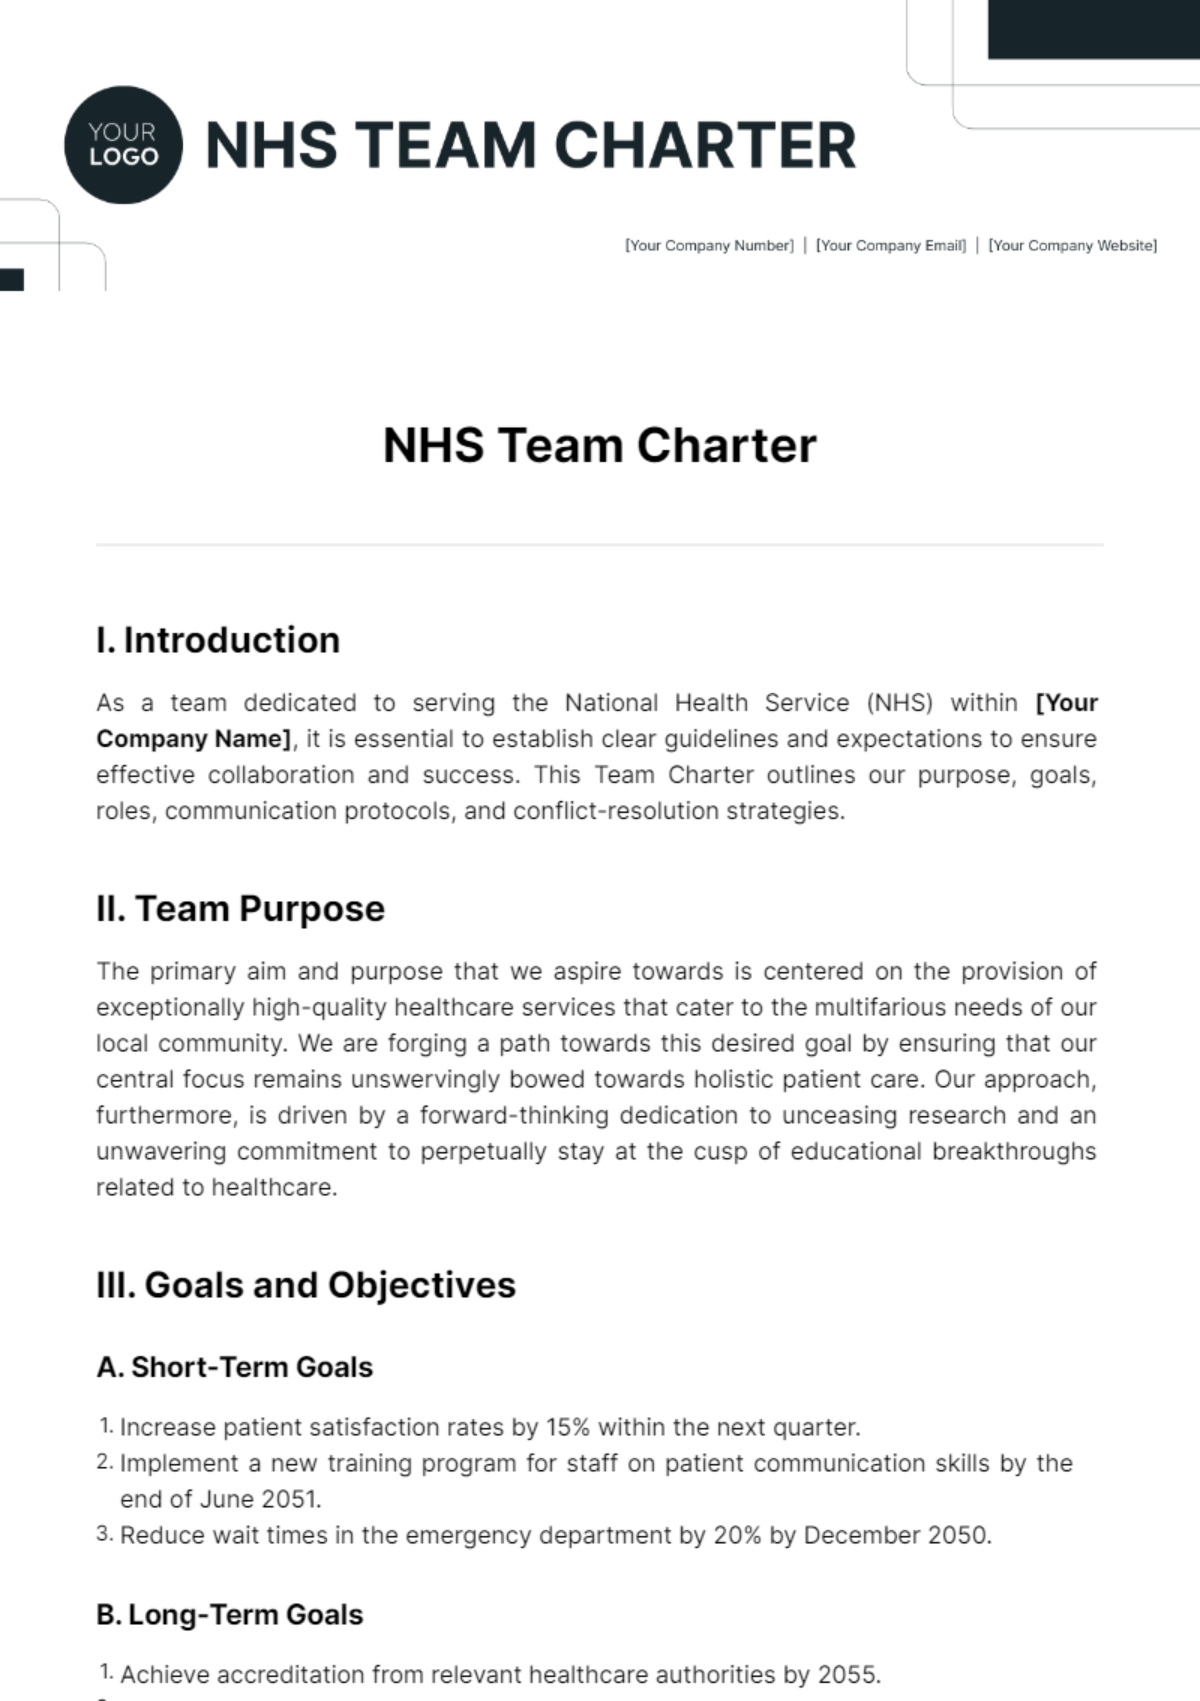 Nhs Team Charter Template